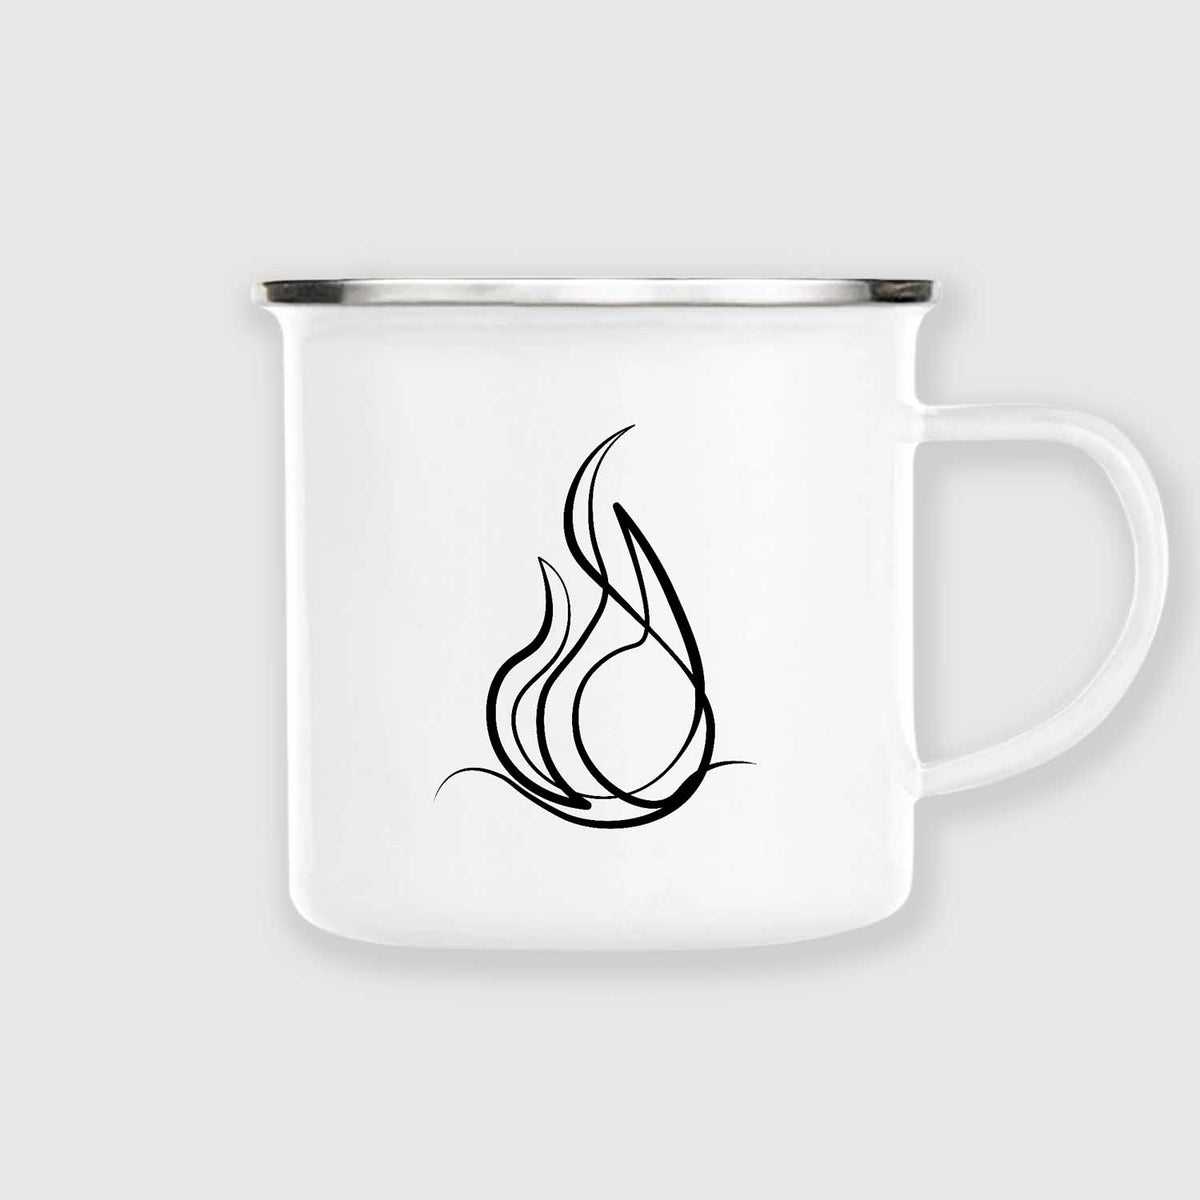 Fire | Enamel mug